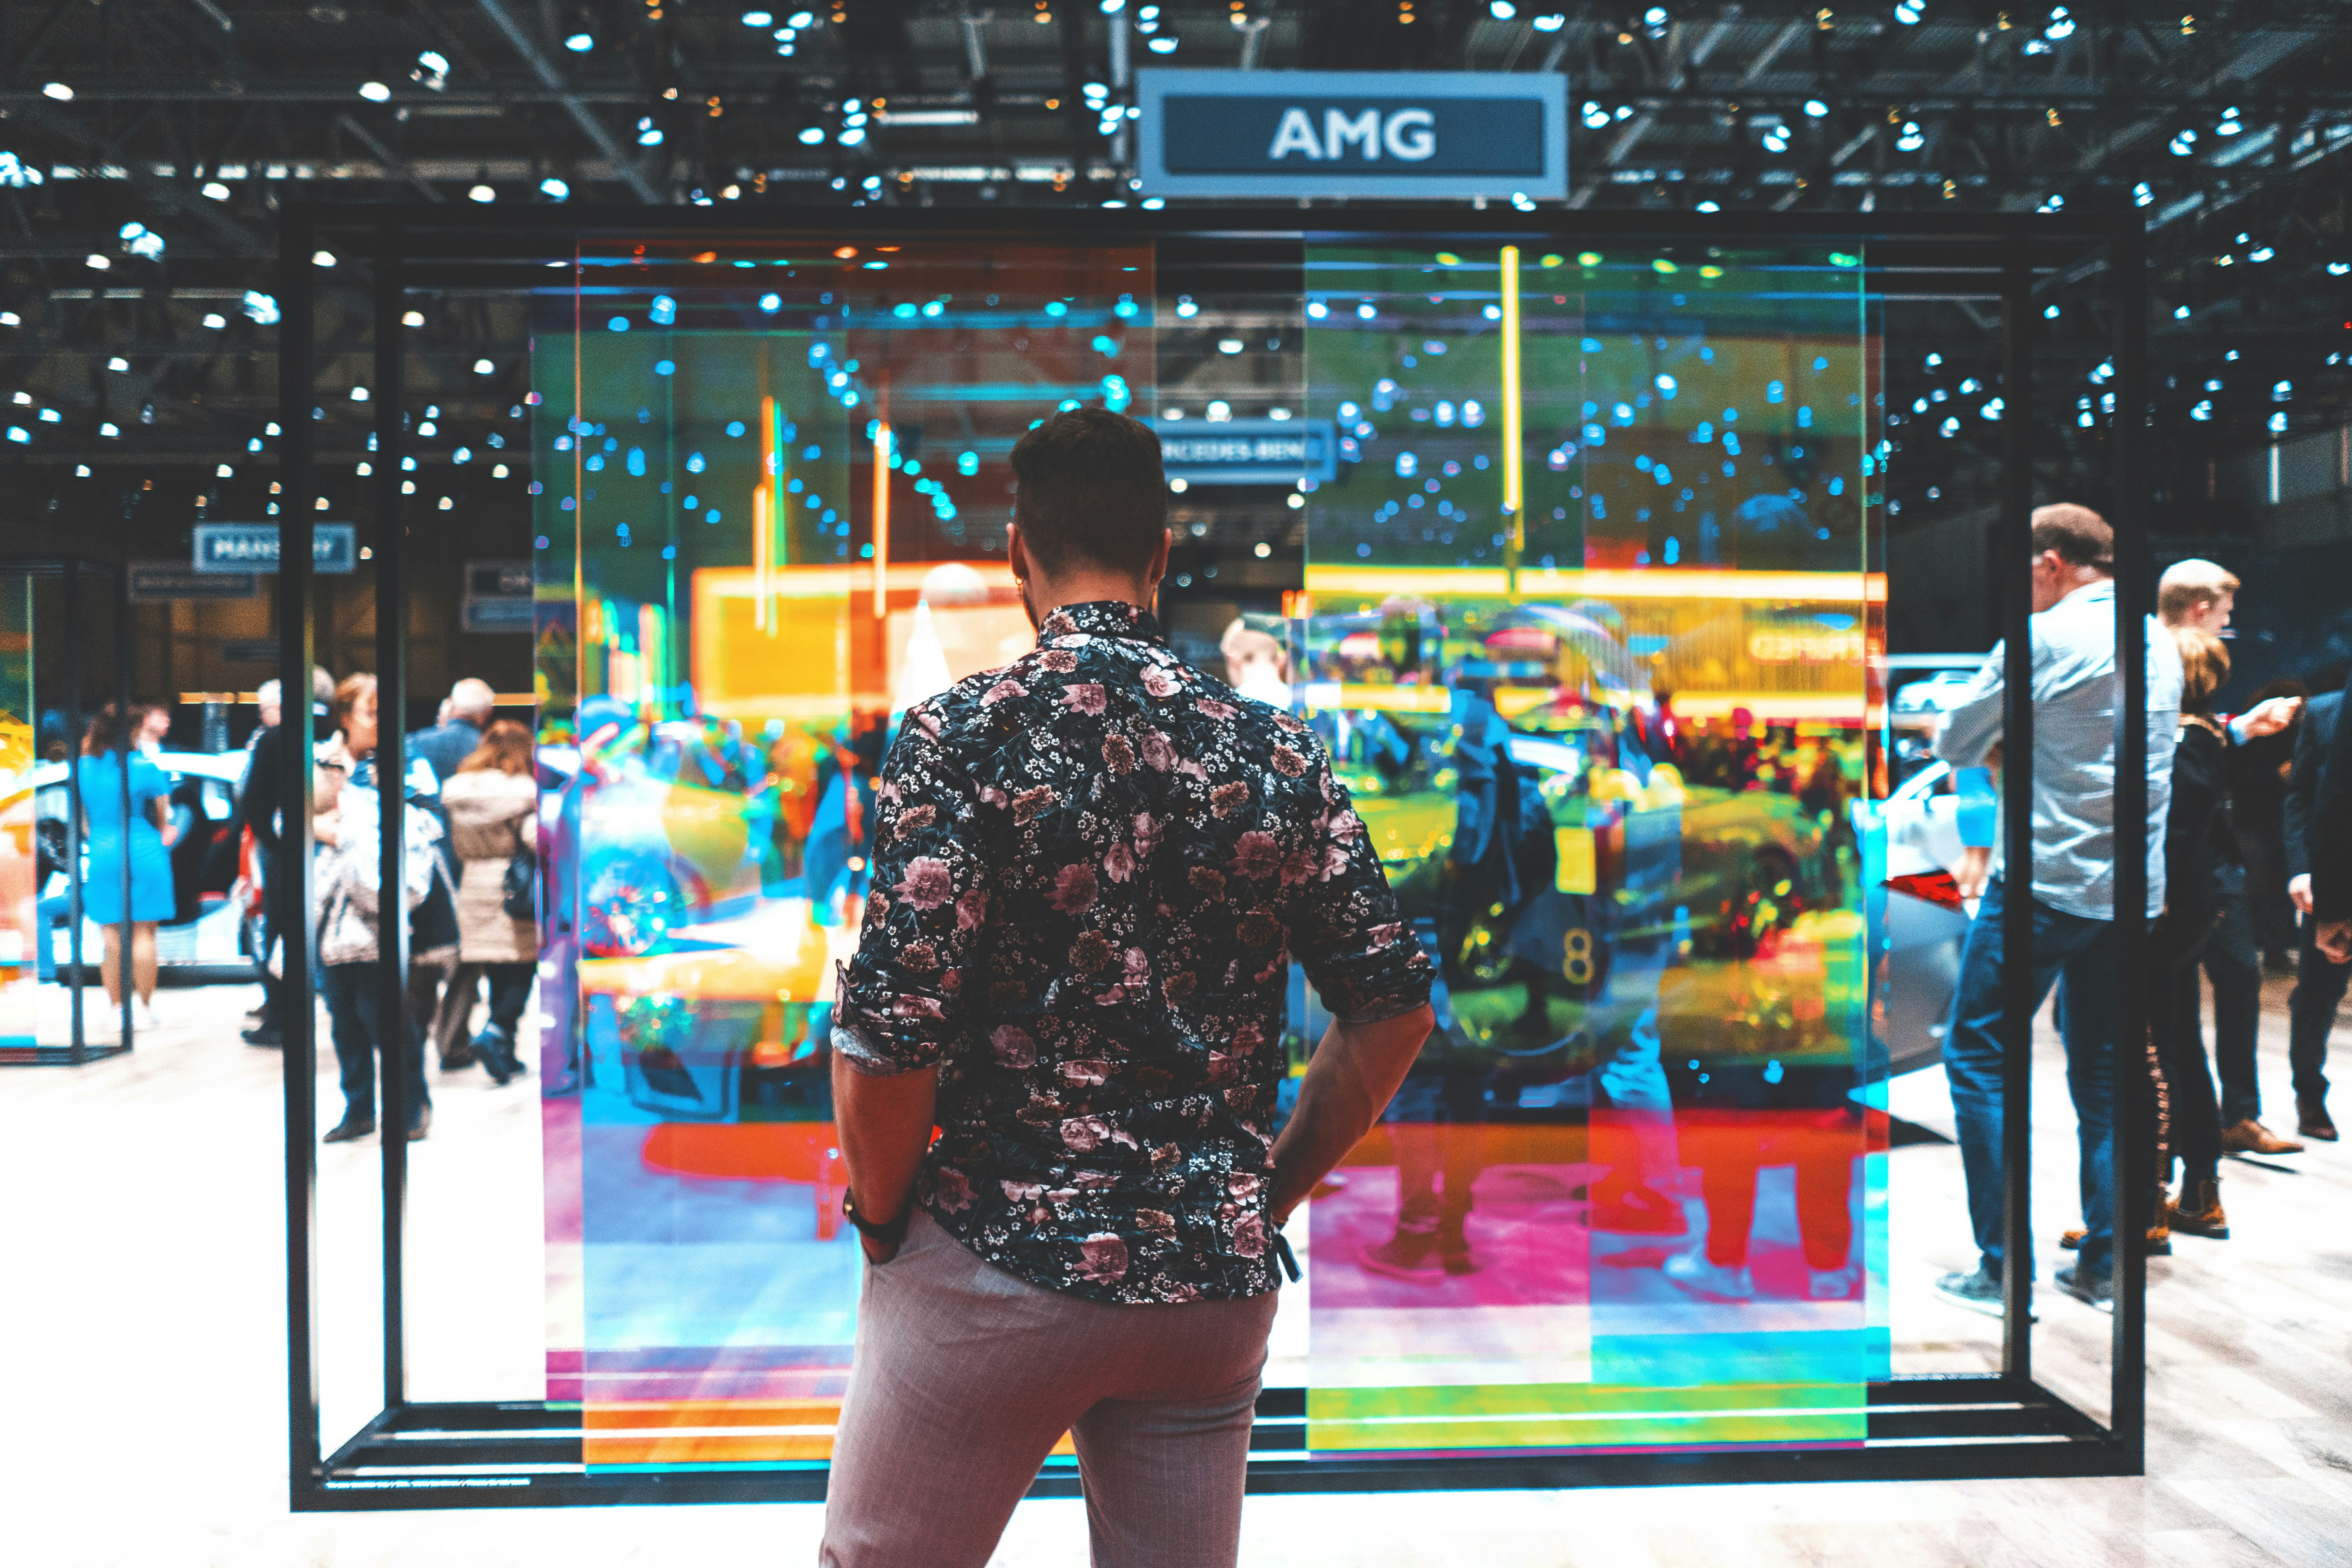 man standing on AMG display